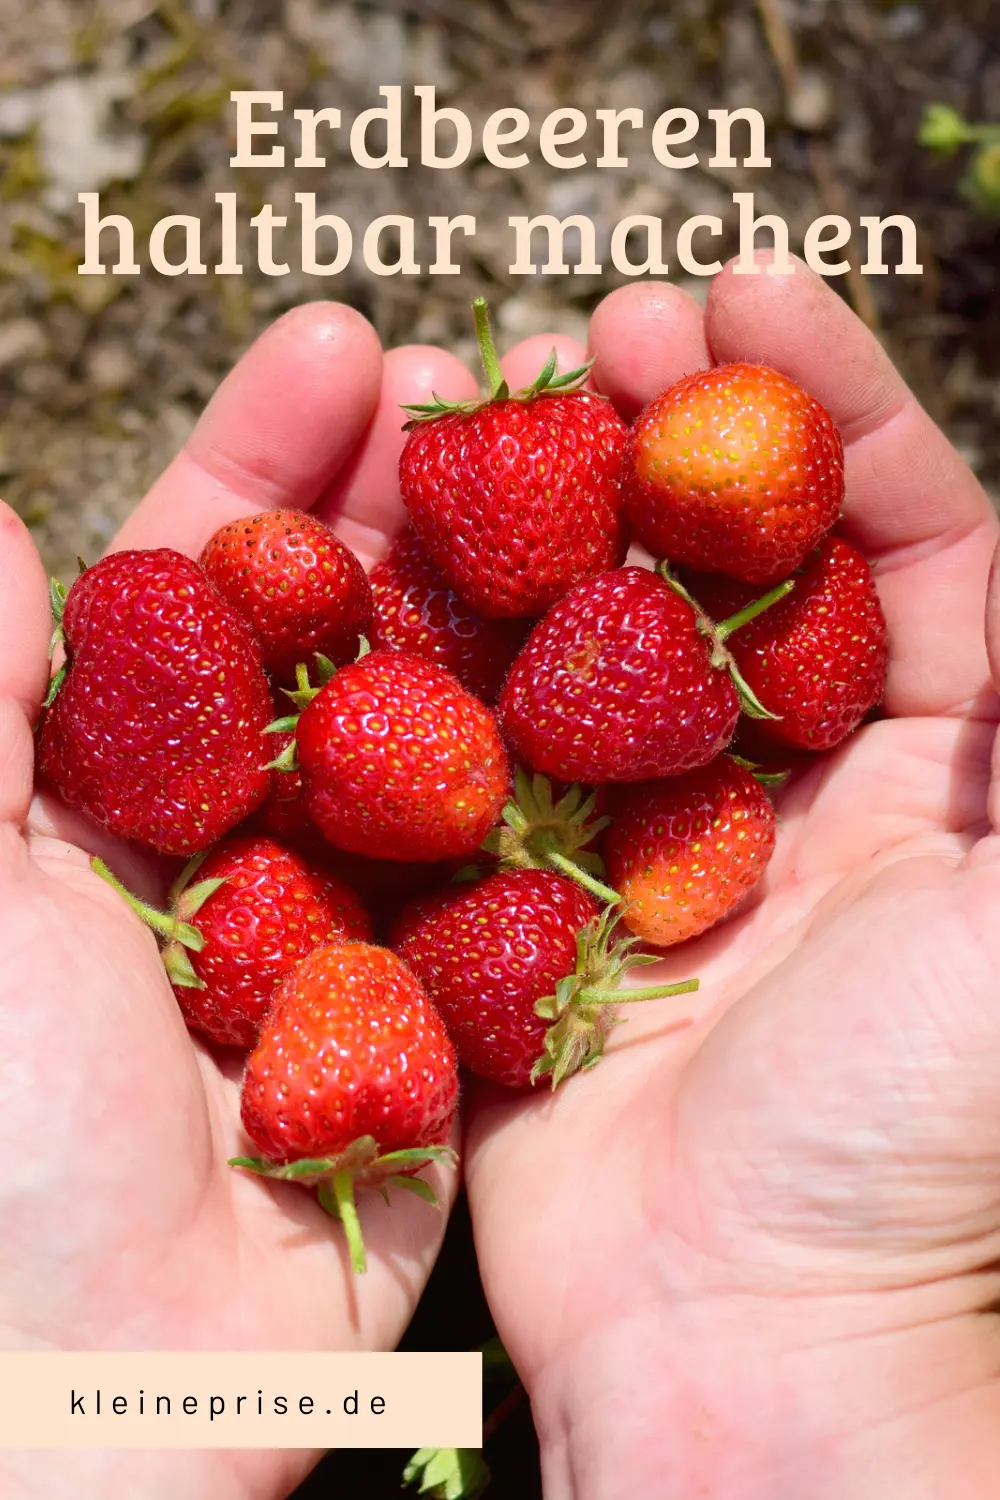 Pin es bei Pinterest: Erdbeeren haltbar machen